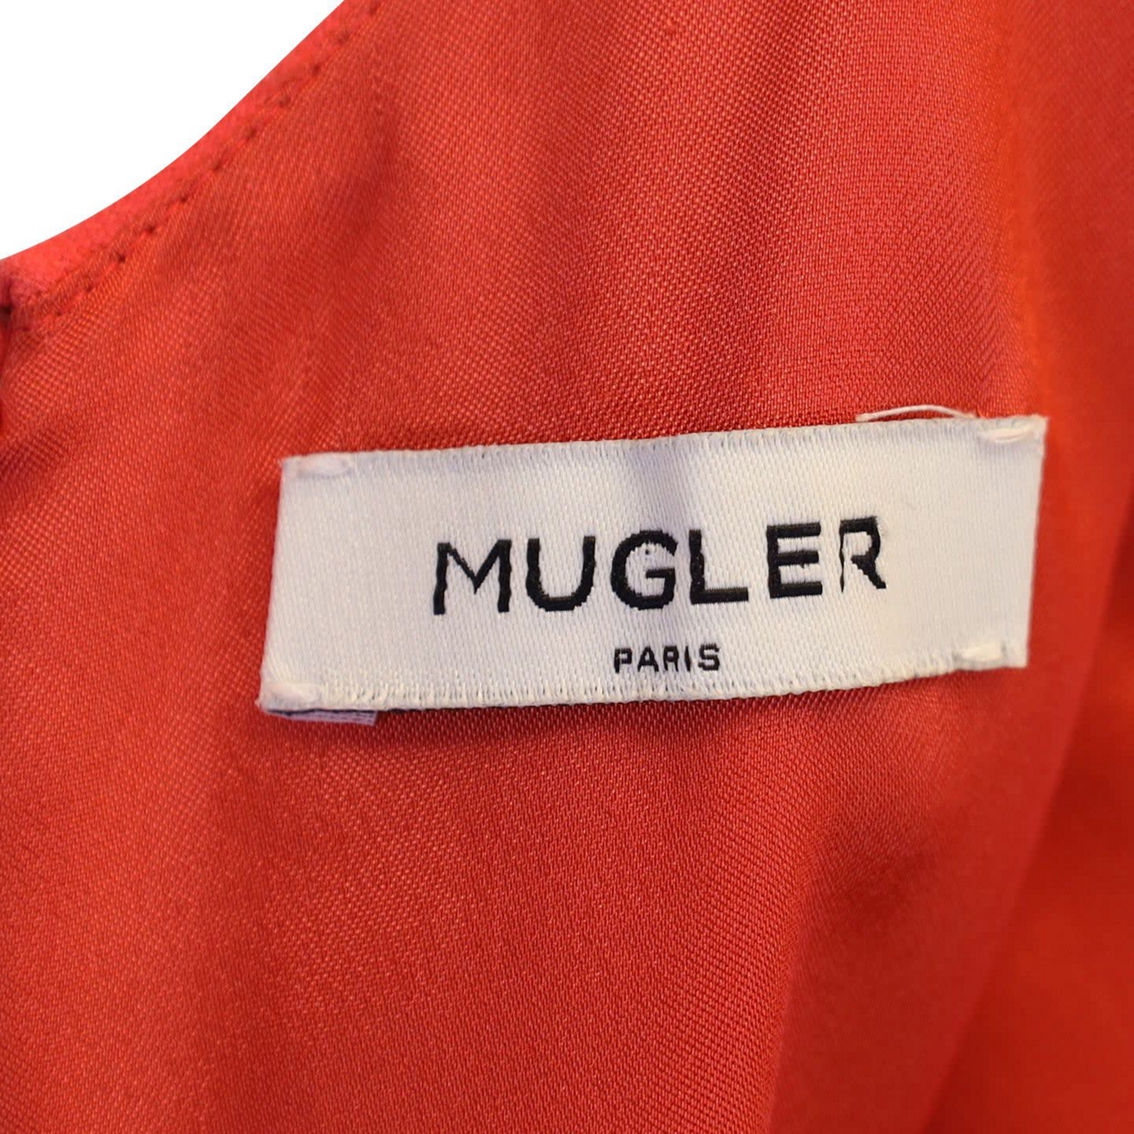 Mugler Cutout Asymmetric Dress in Orange Viscose (Pre-Owned) - Image 3 of 3